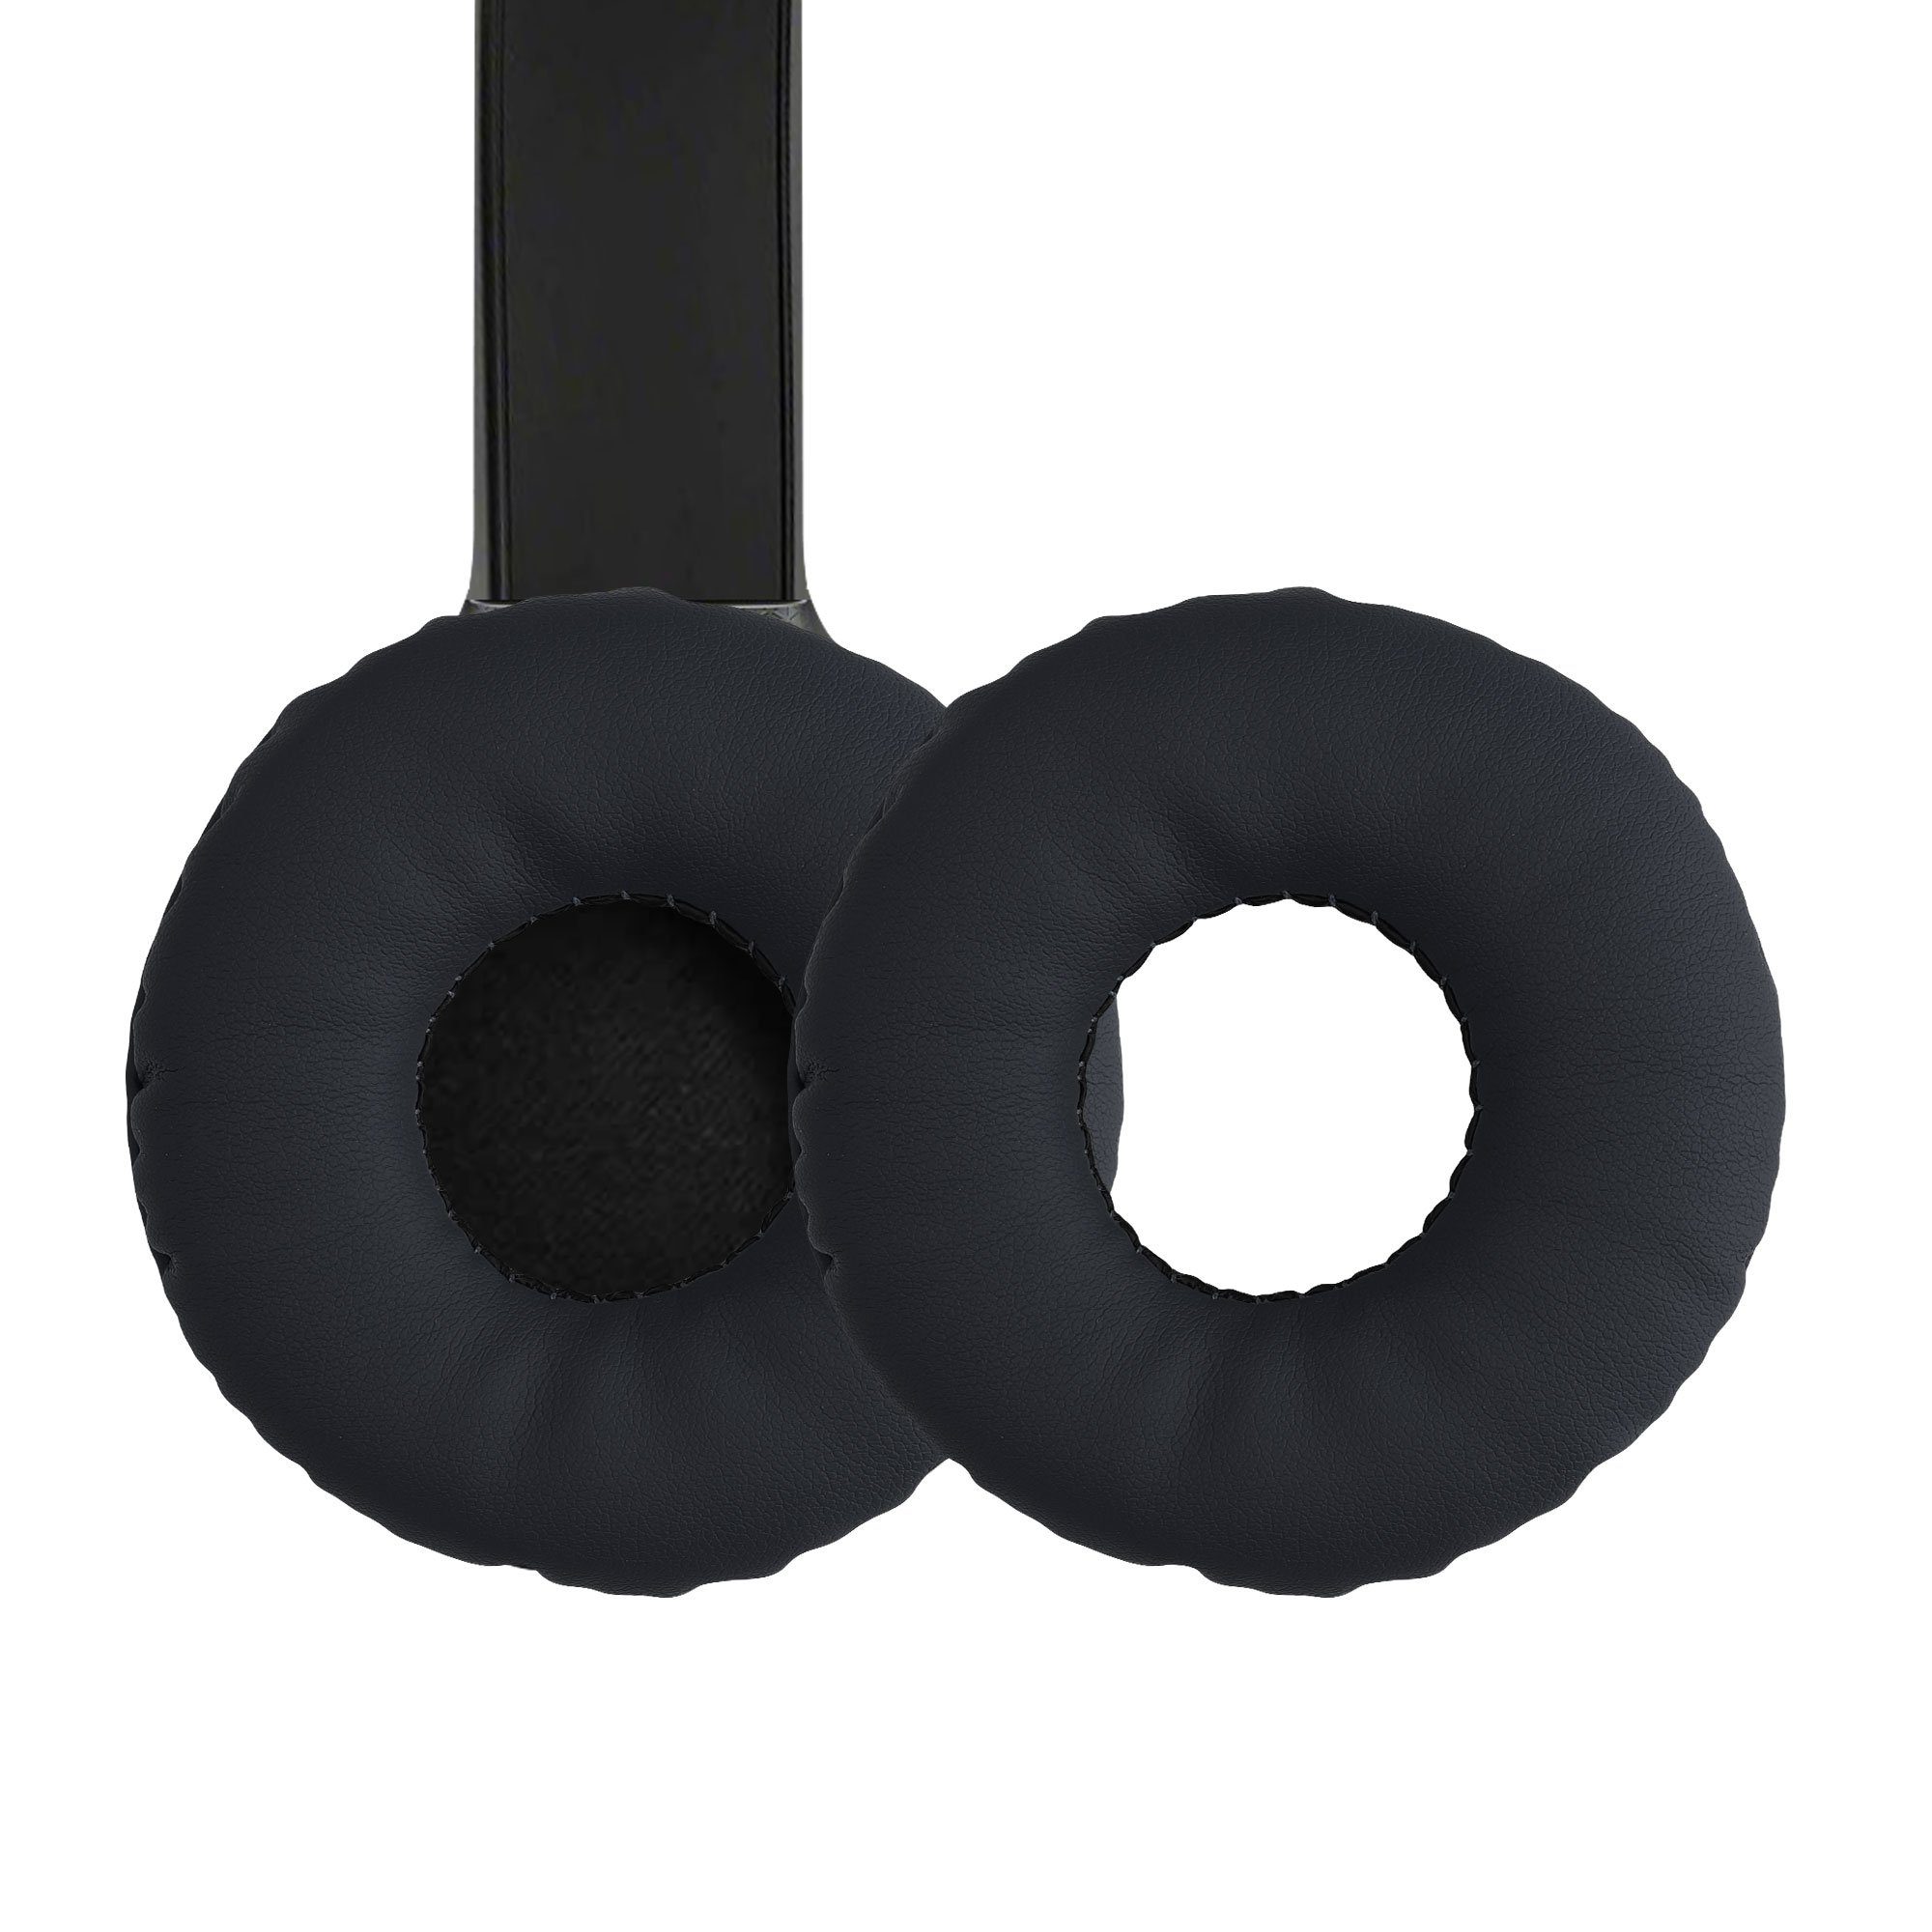 kwmobile 2x Ohr Polster für Sony WH-CH510 Ohrpolster (Ohrpolster Kopfhörer - Kunstleder Polster für Over Ear Headphones) Schwarz